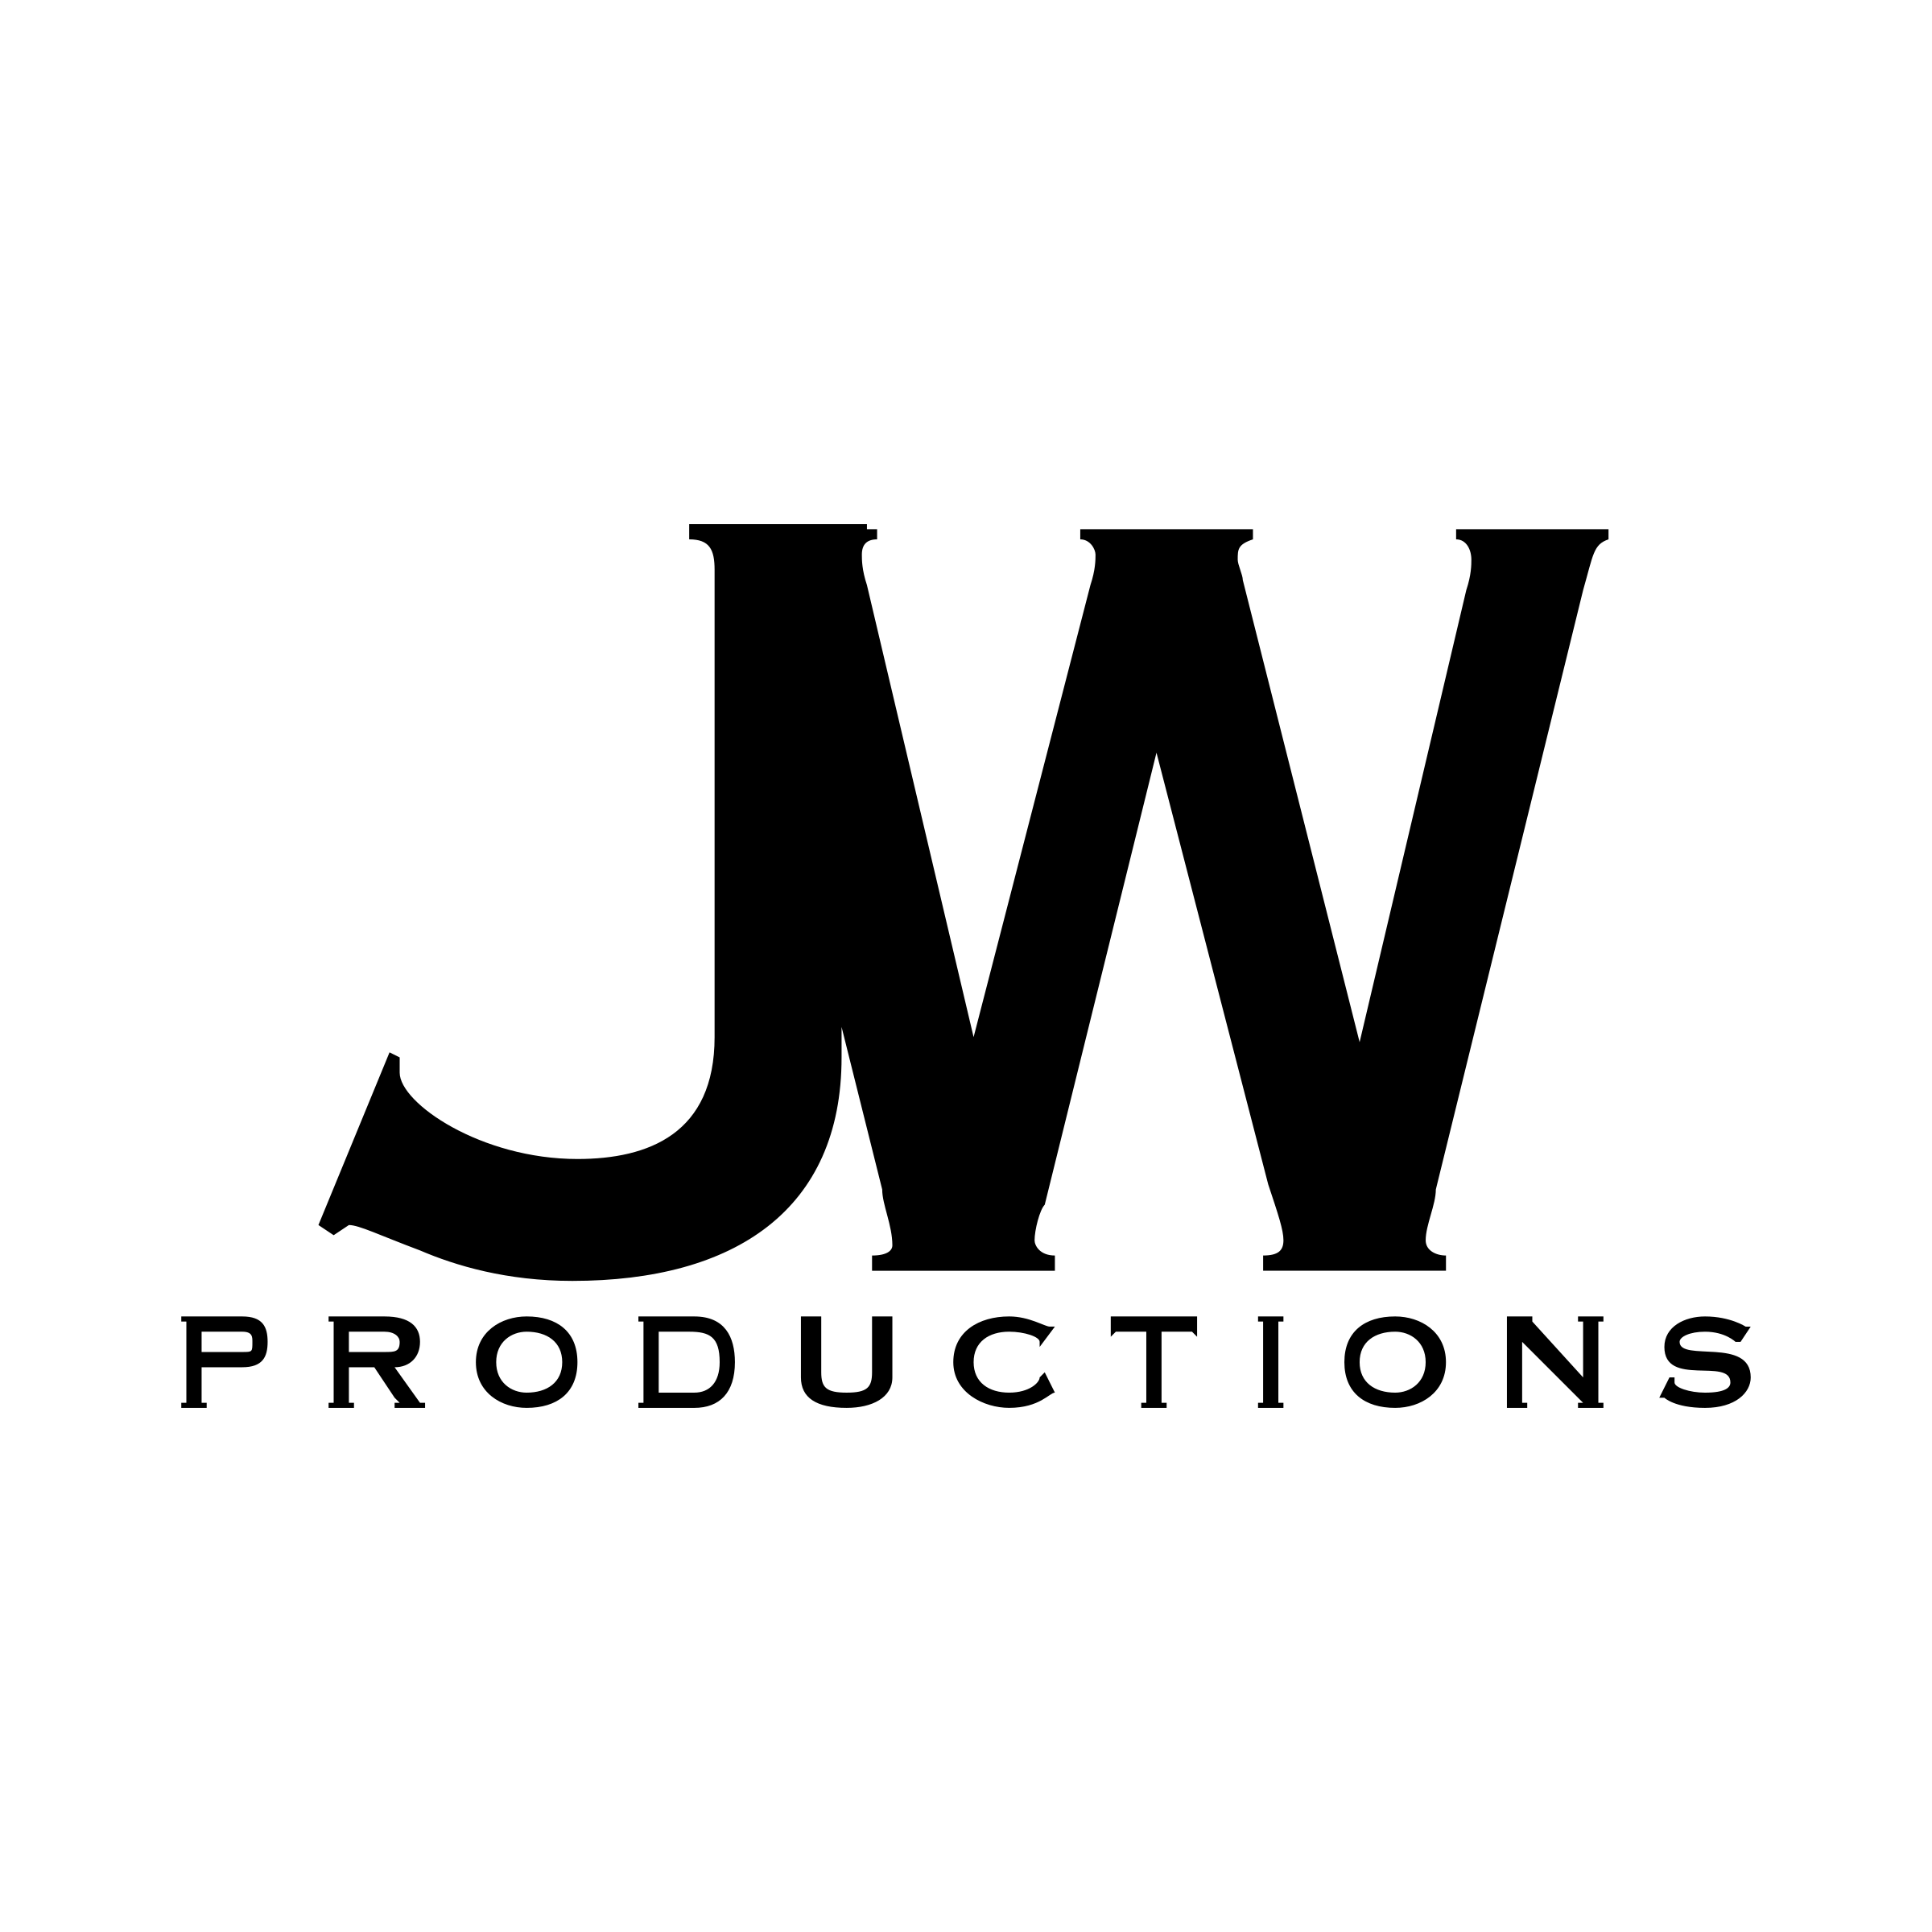 JW Logo - JW Productions Logo PNG Transparent & SVG Vector - Freebie Supply